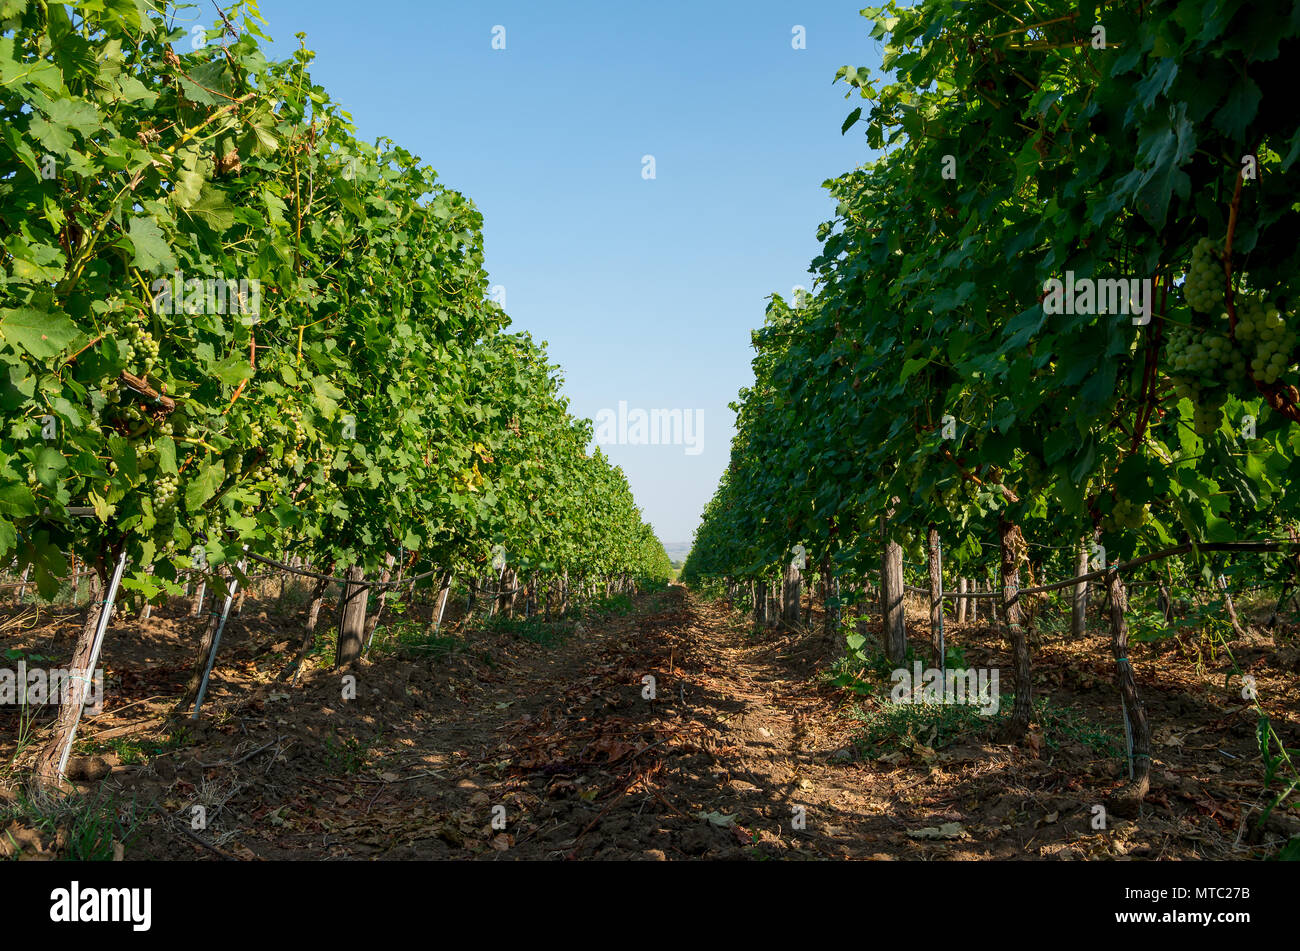 A vineyard plantation of grape bearing vines. Rows of vineyard. Stock Photo